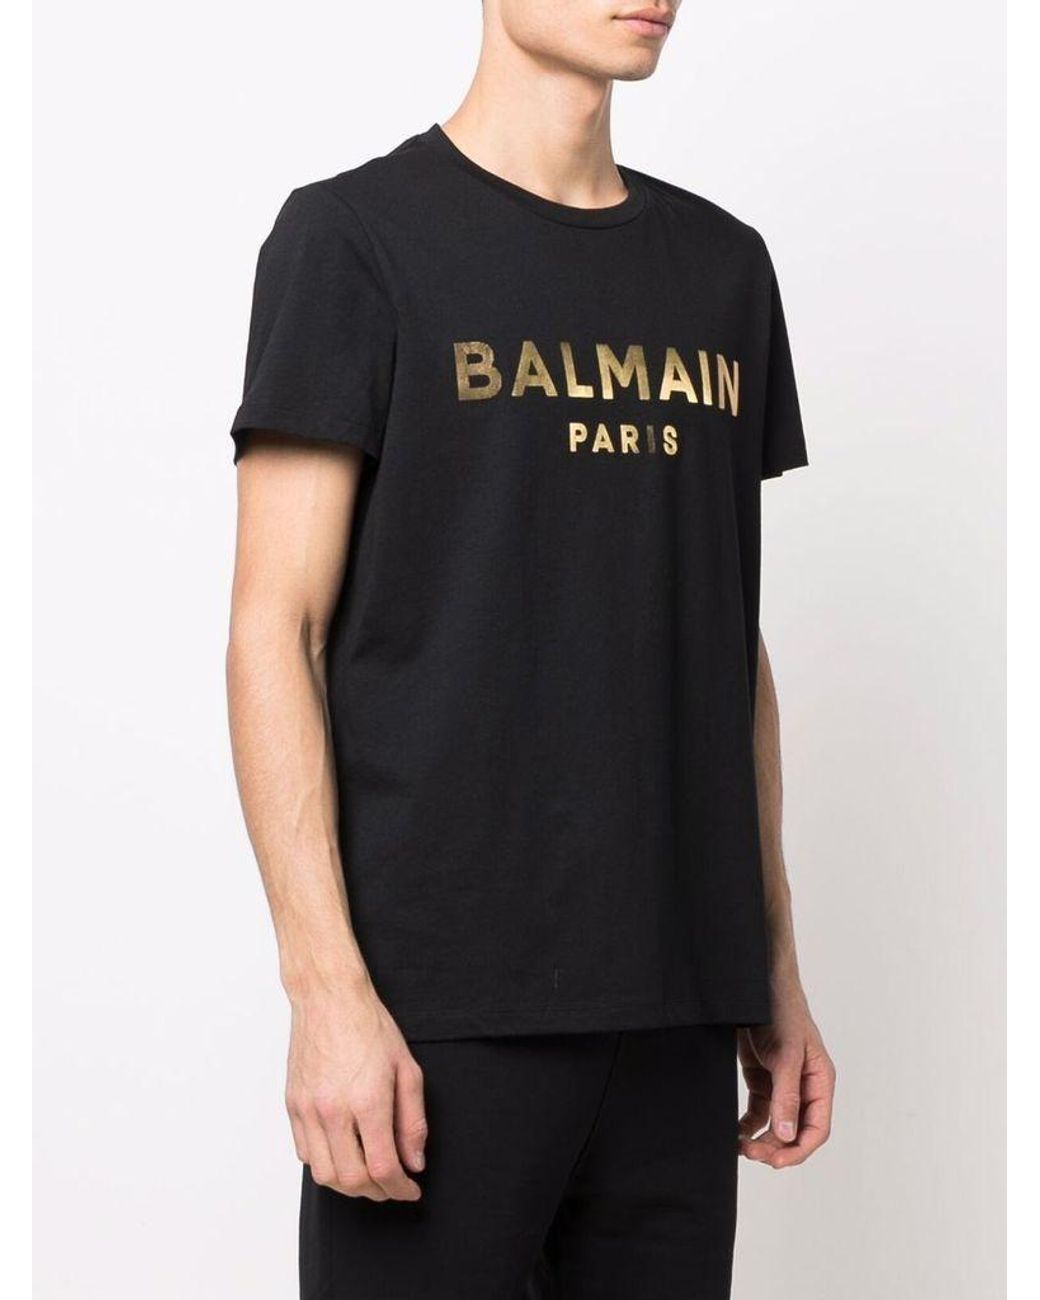 Balmain Cotton Logo T-shirt Gold in Black for Men - Lyst